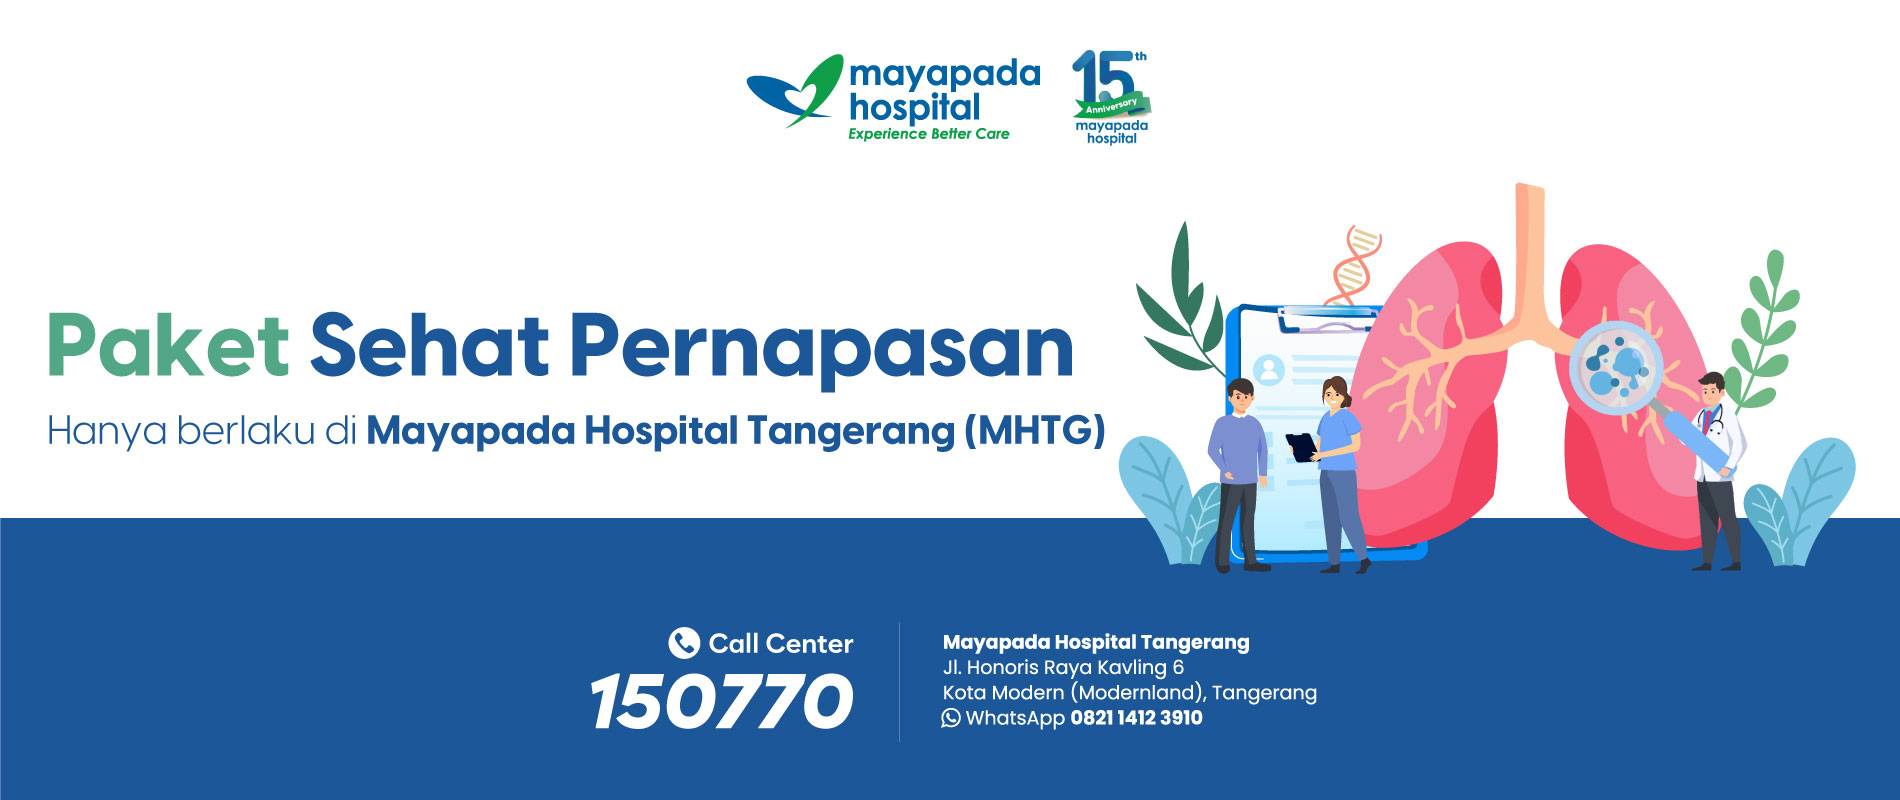 Paket Sehat Pernapasan Mayapada Hospital Tangerang IMG